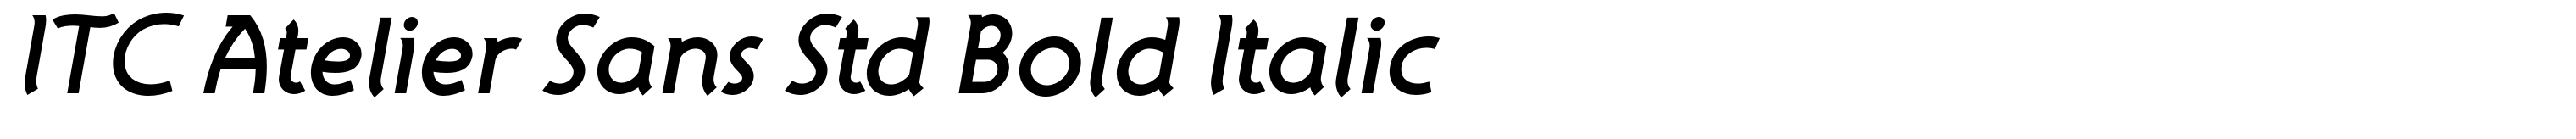 ITC Atelier Sans Std Bold Italic